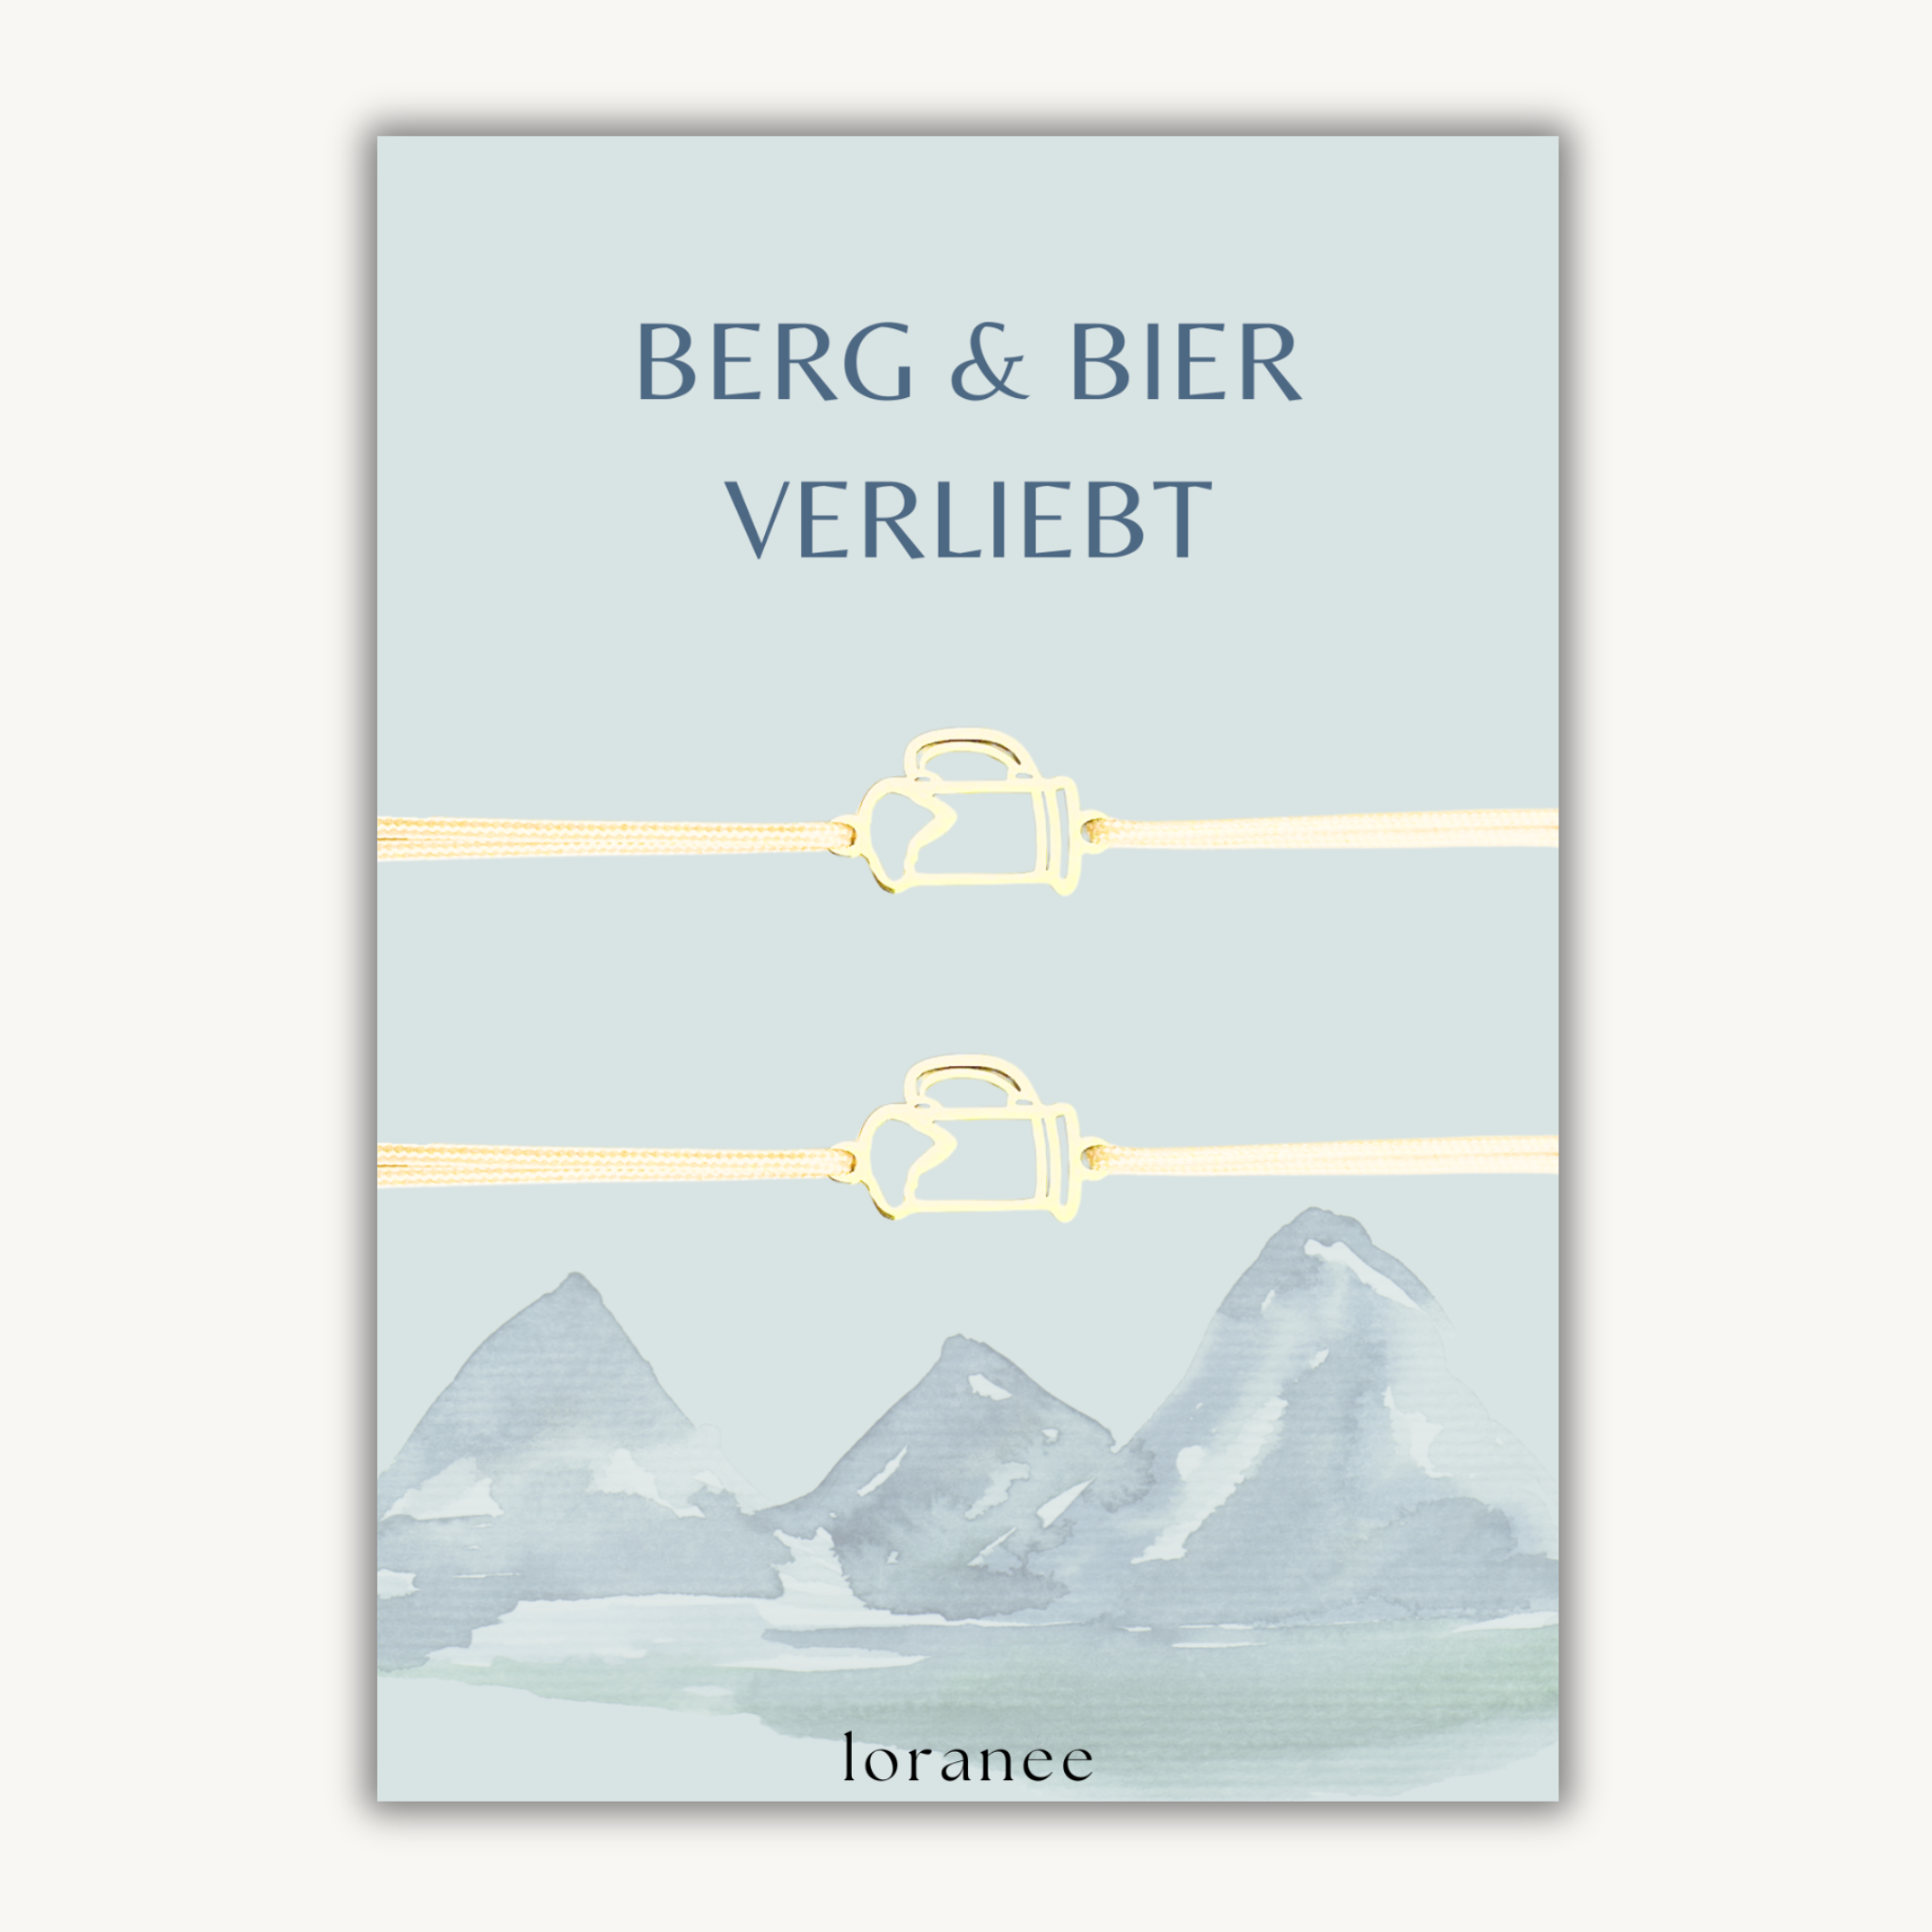 BERG & BIER VERLIEBT